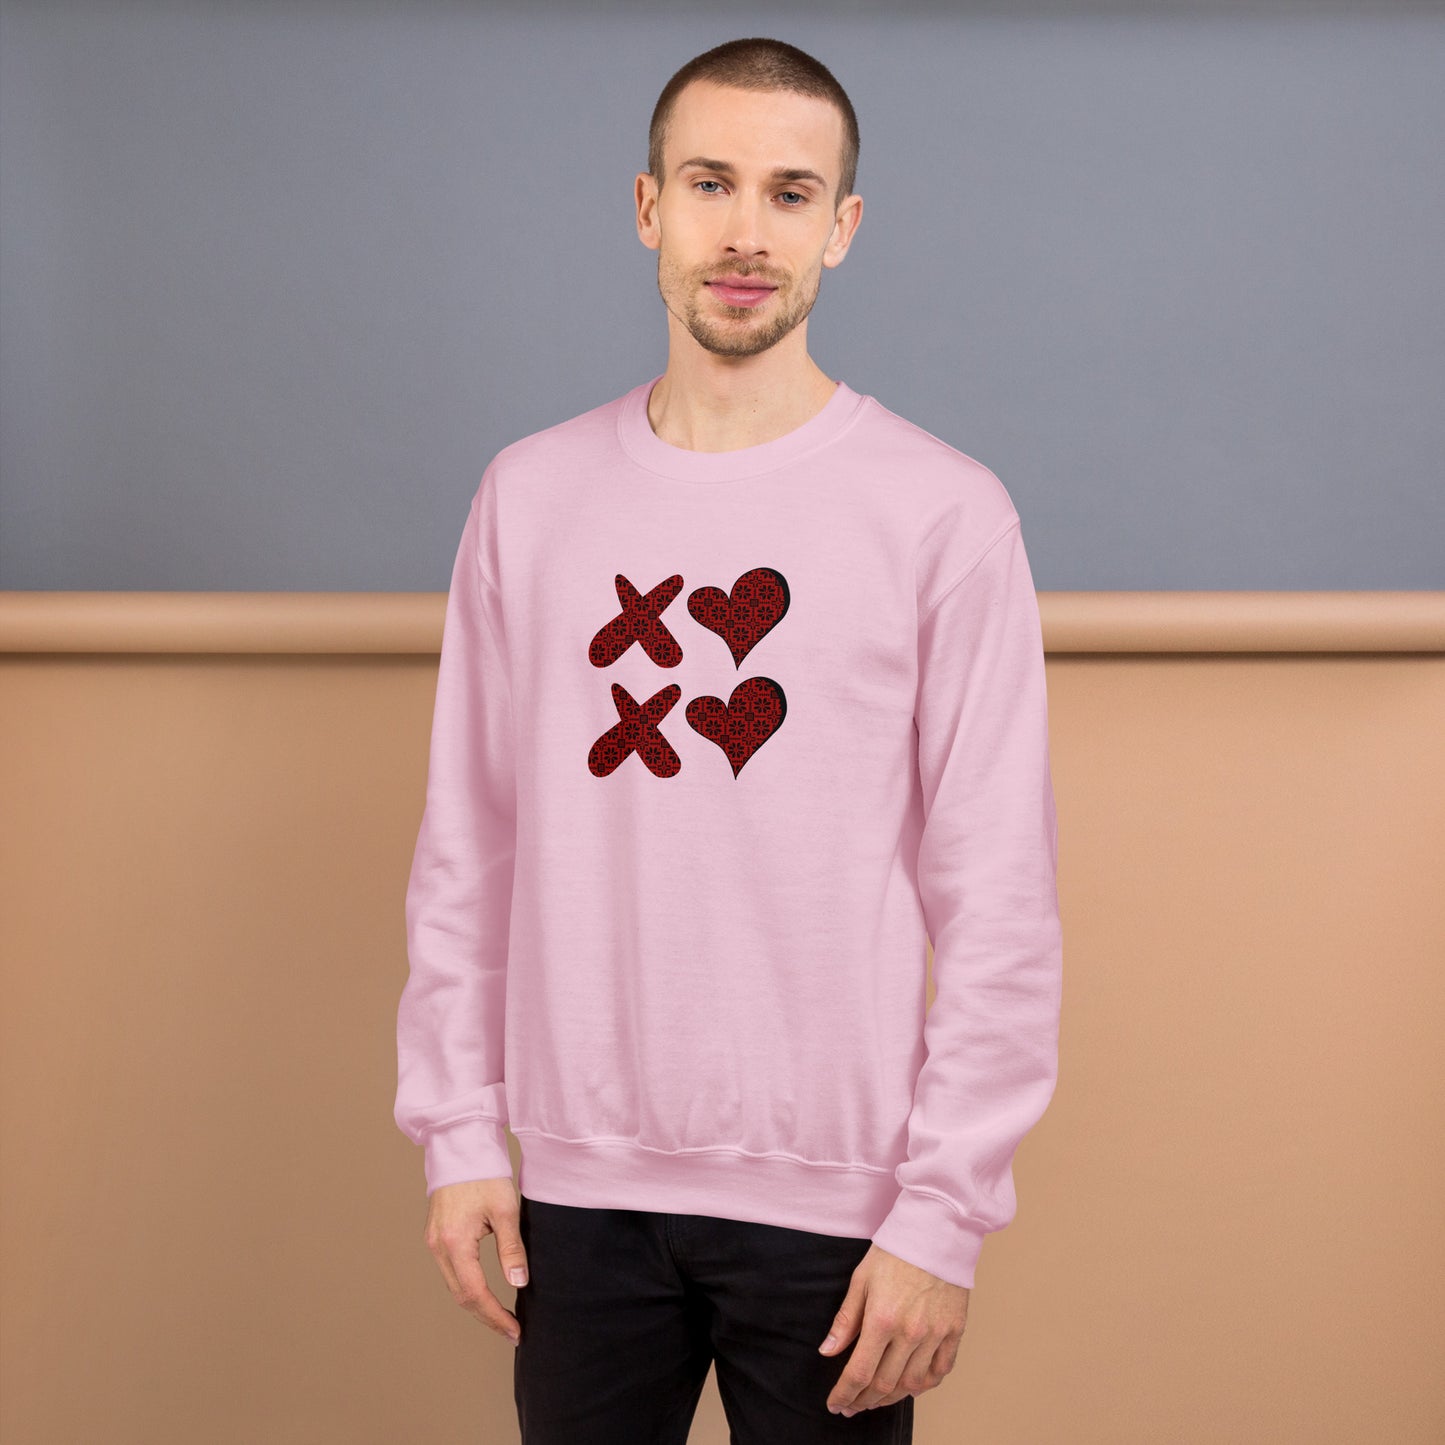 Unisex Palestine Sweatshirt with XOXO Palestinian Tatreez Design - Valentine's Day Gift, Activist Shirt, Palestine Solidarity